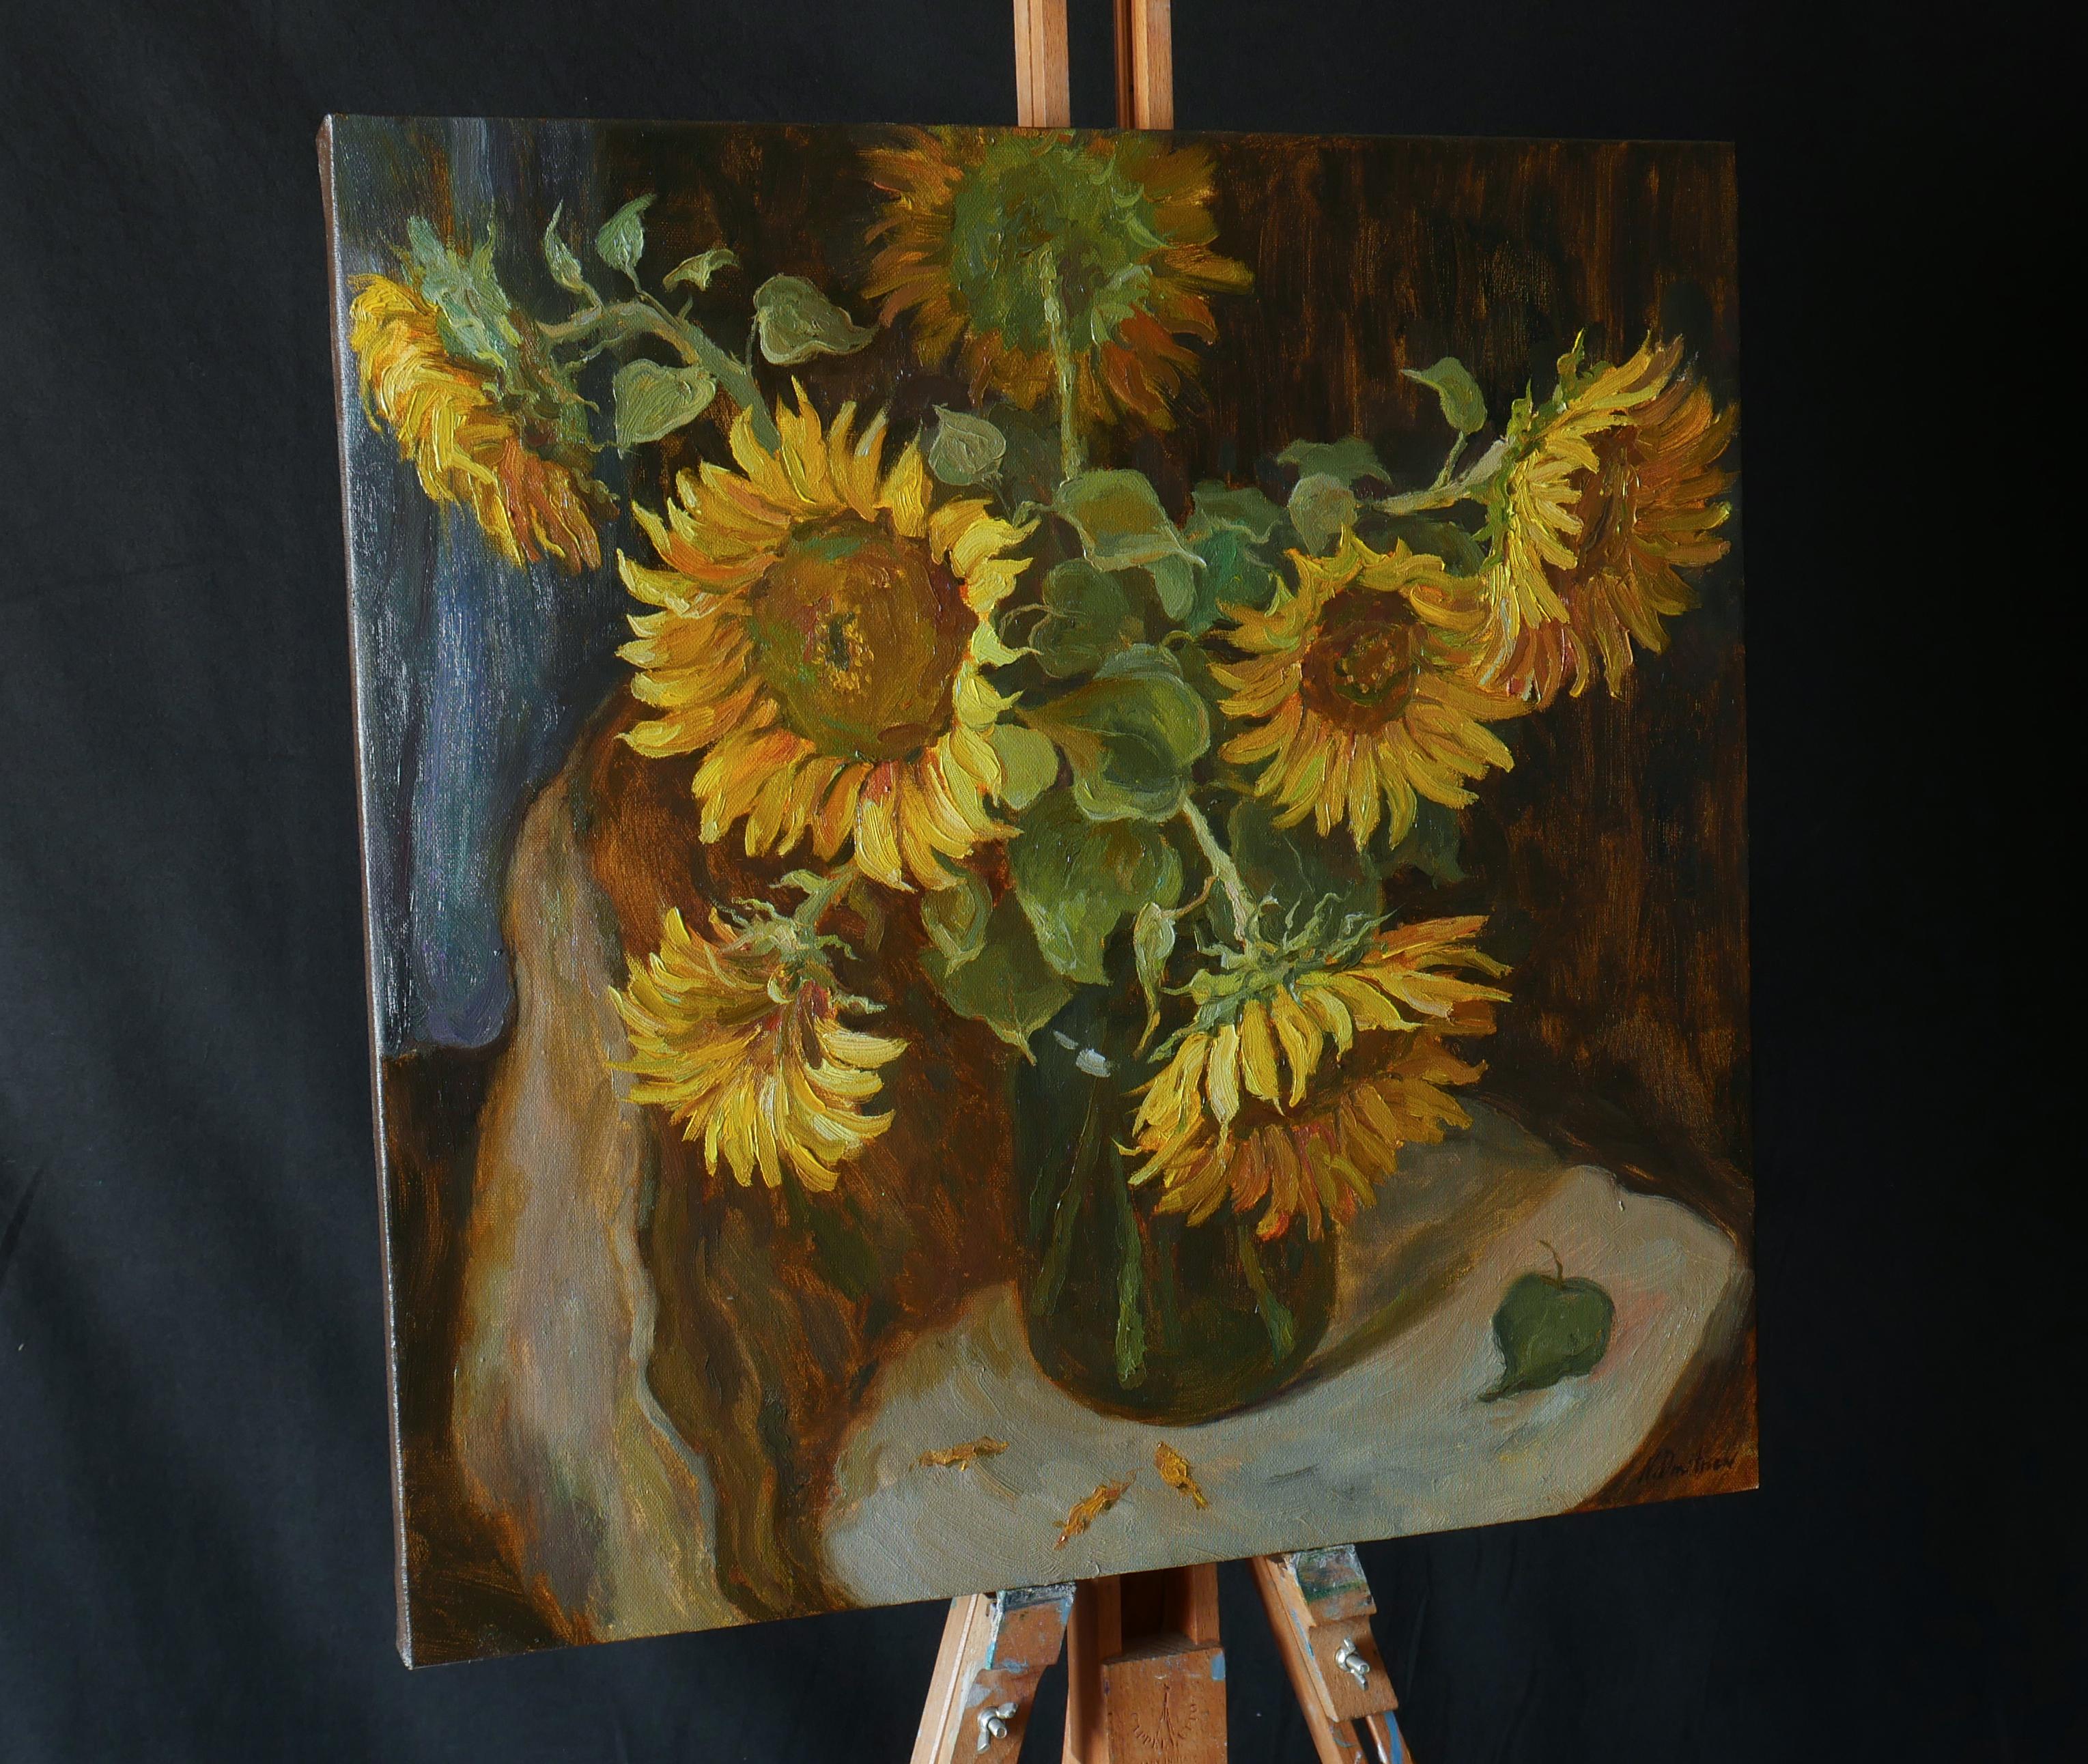 Sunflowers Near The Blue Curtain - sunflowers still life painting - Painting by Nikolay Dmitriev